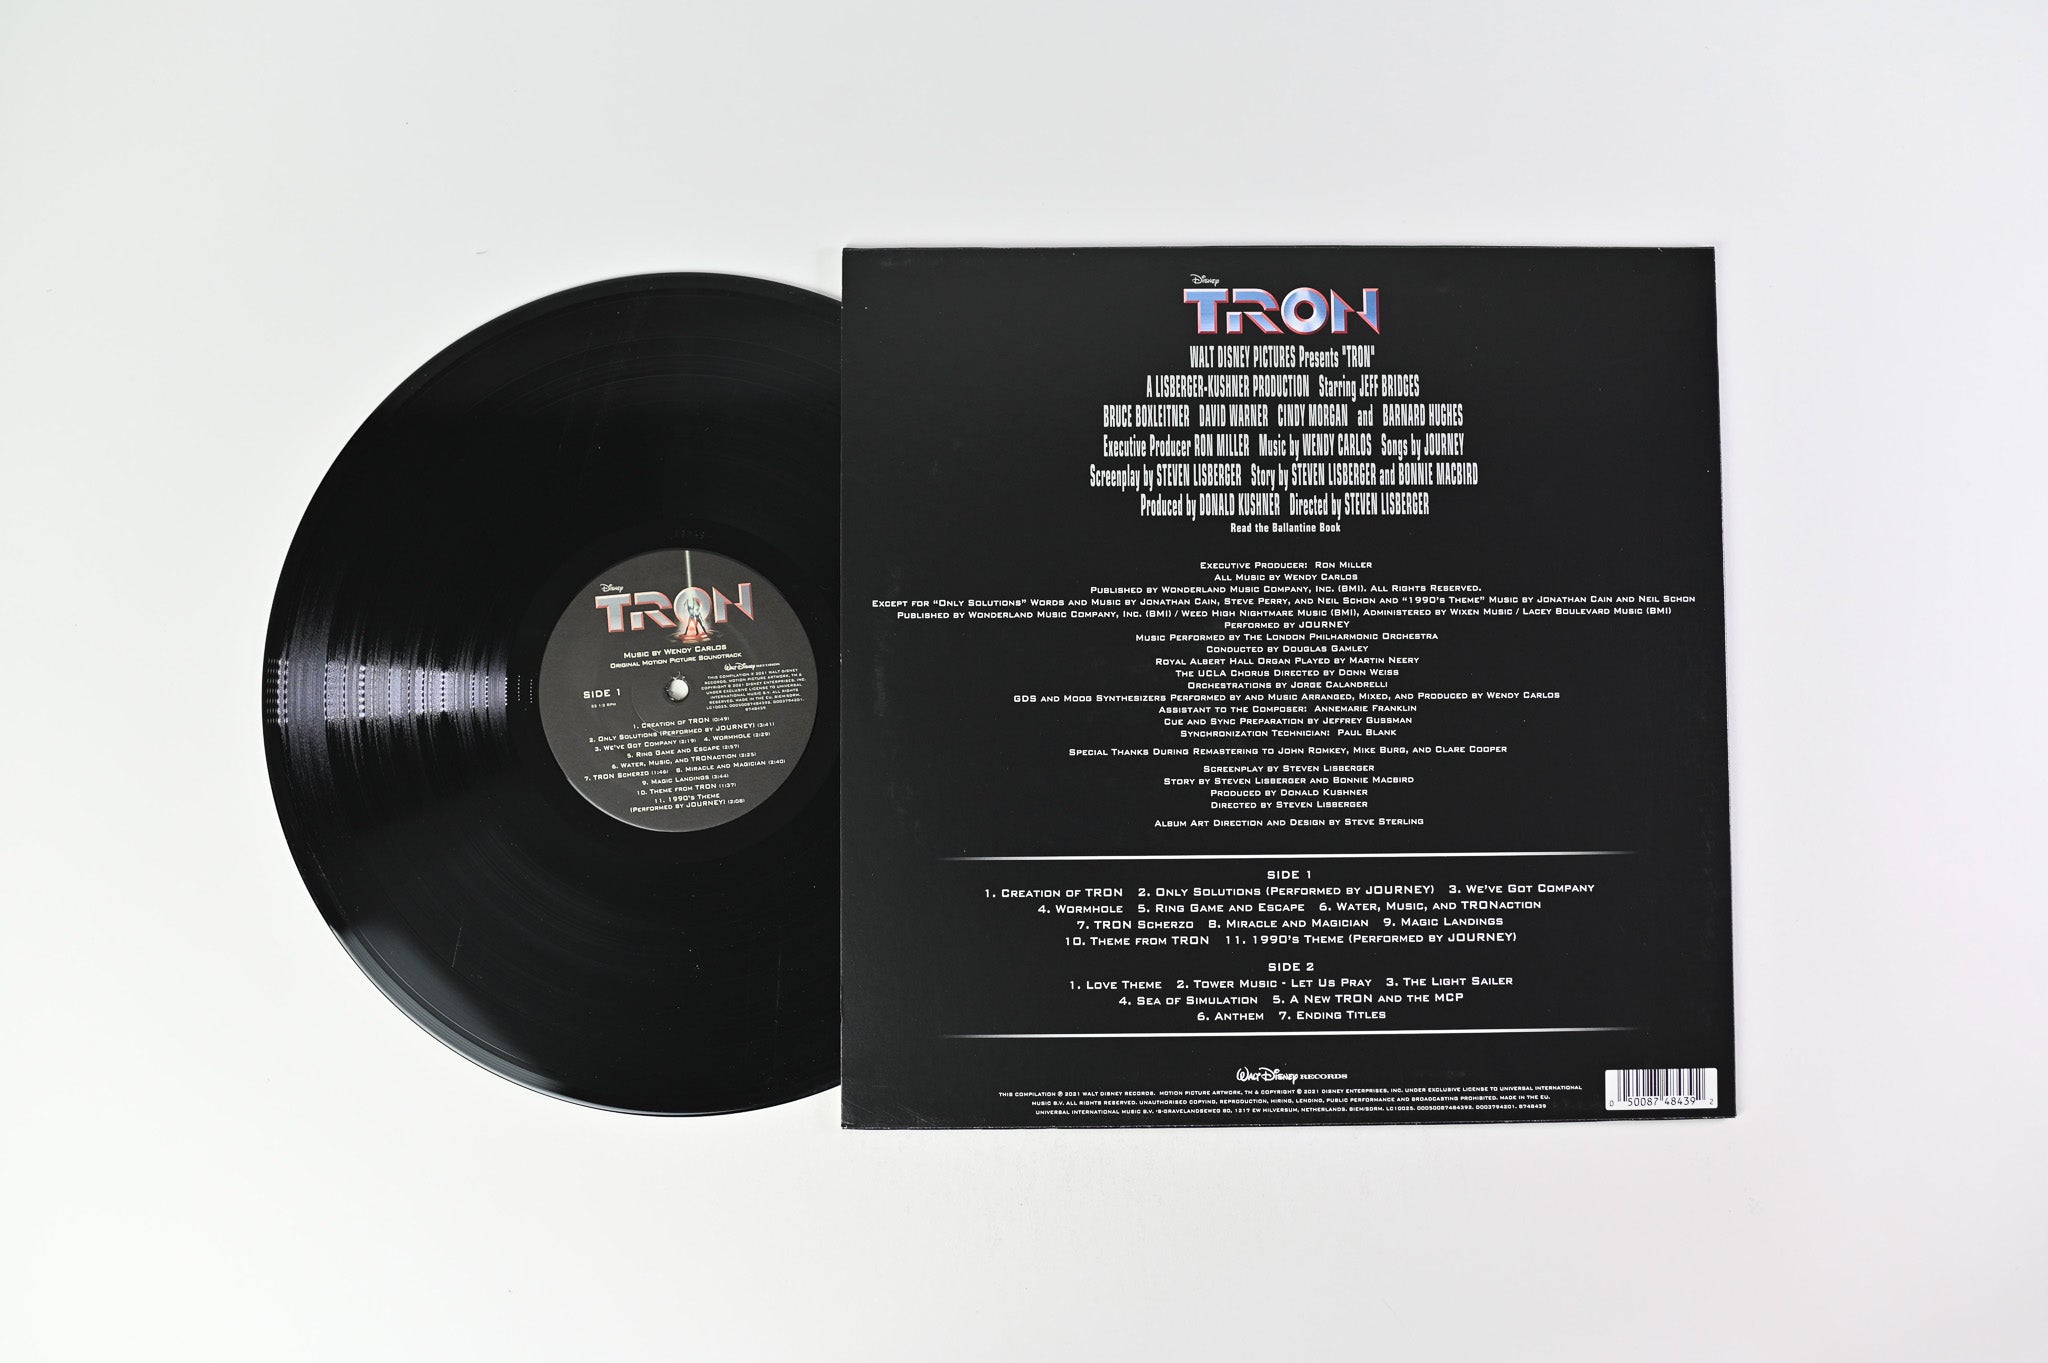 Wendy Carlos - Tron (Original Motion Picture Soundtrack) on Disney Reissue